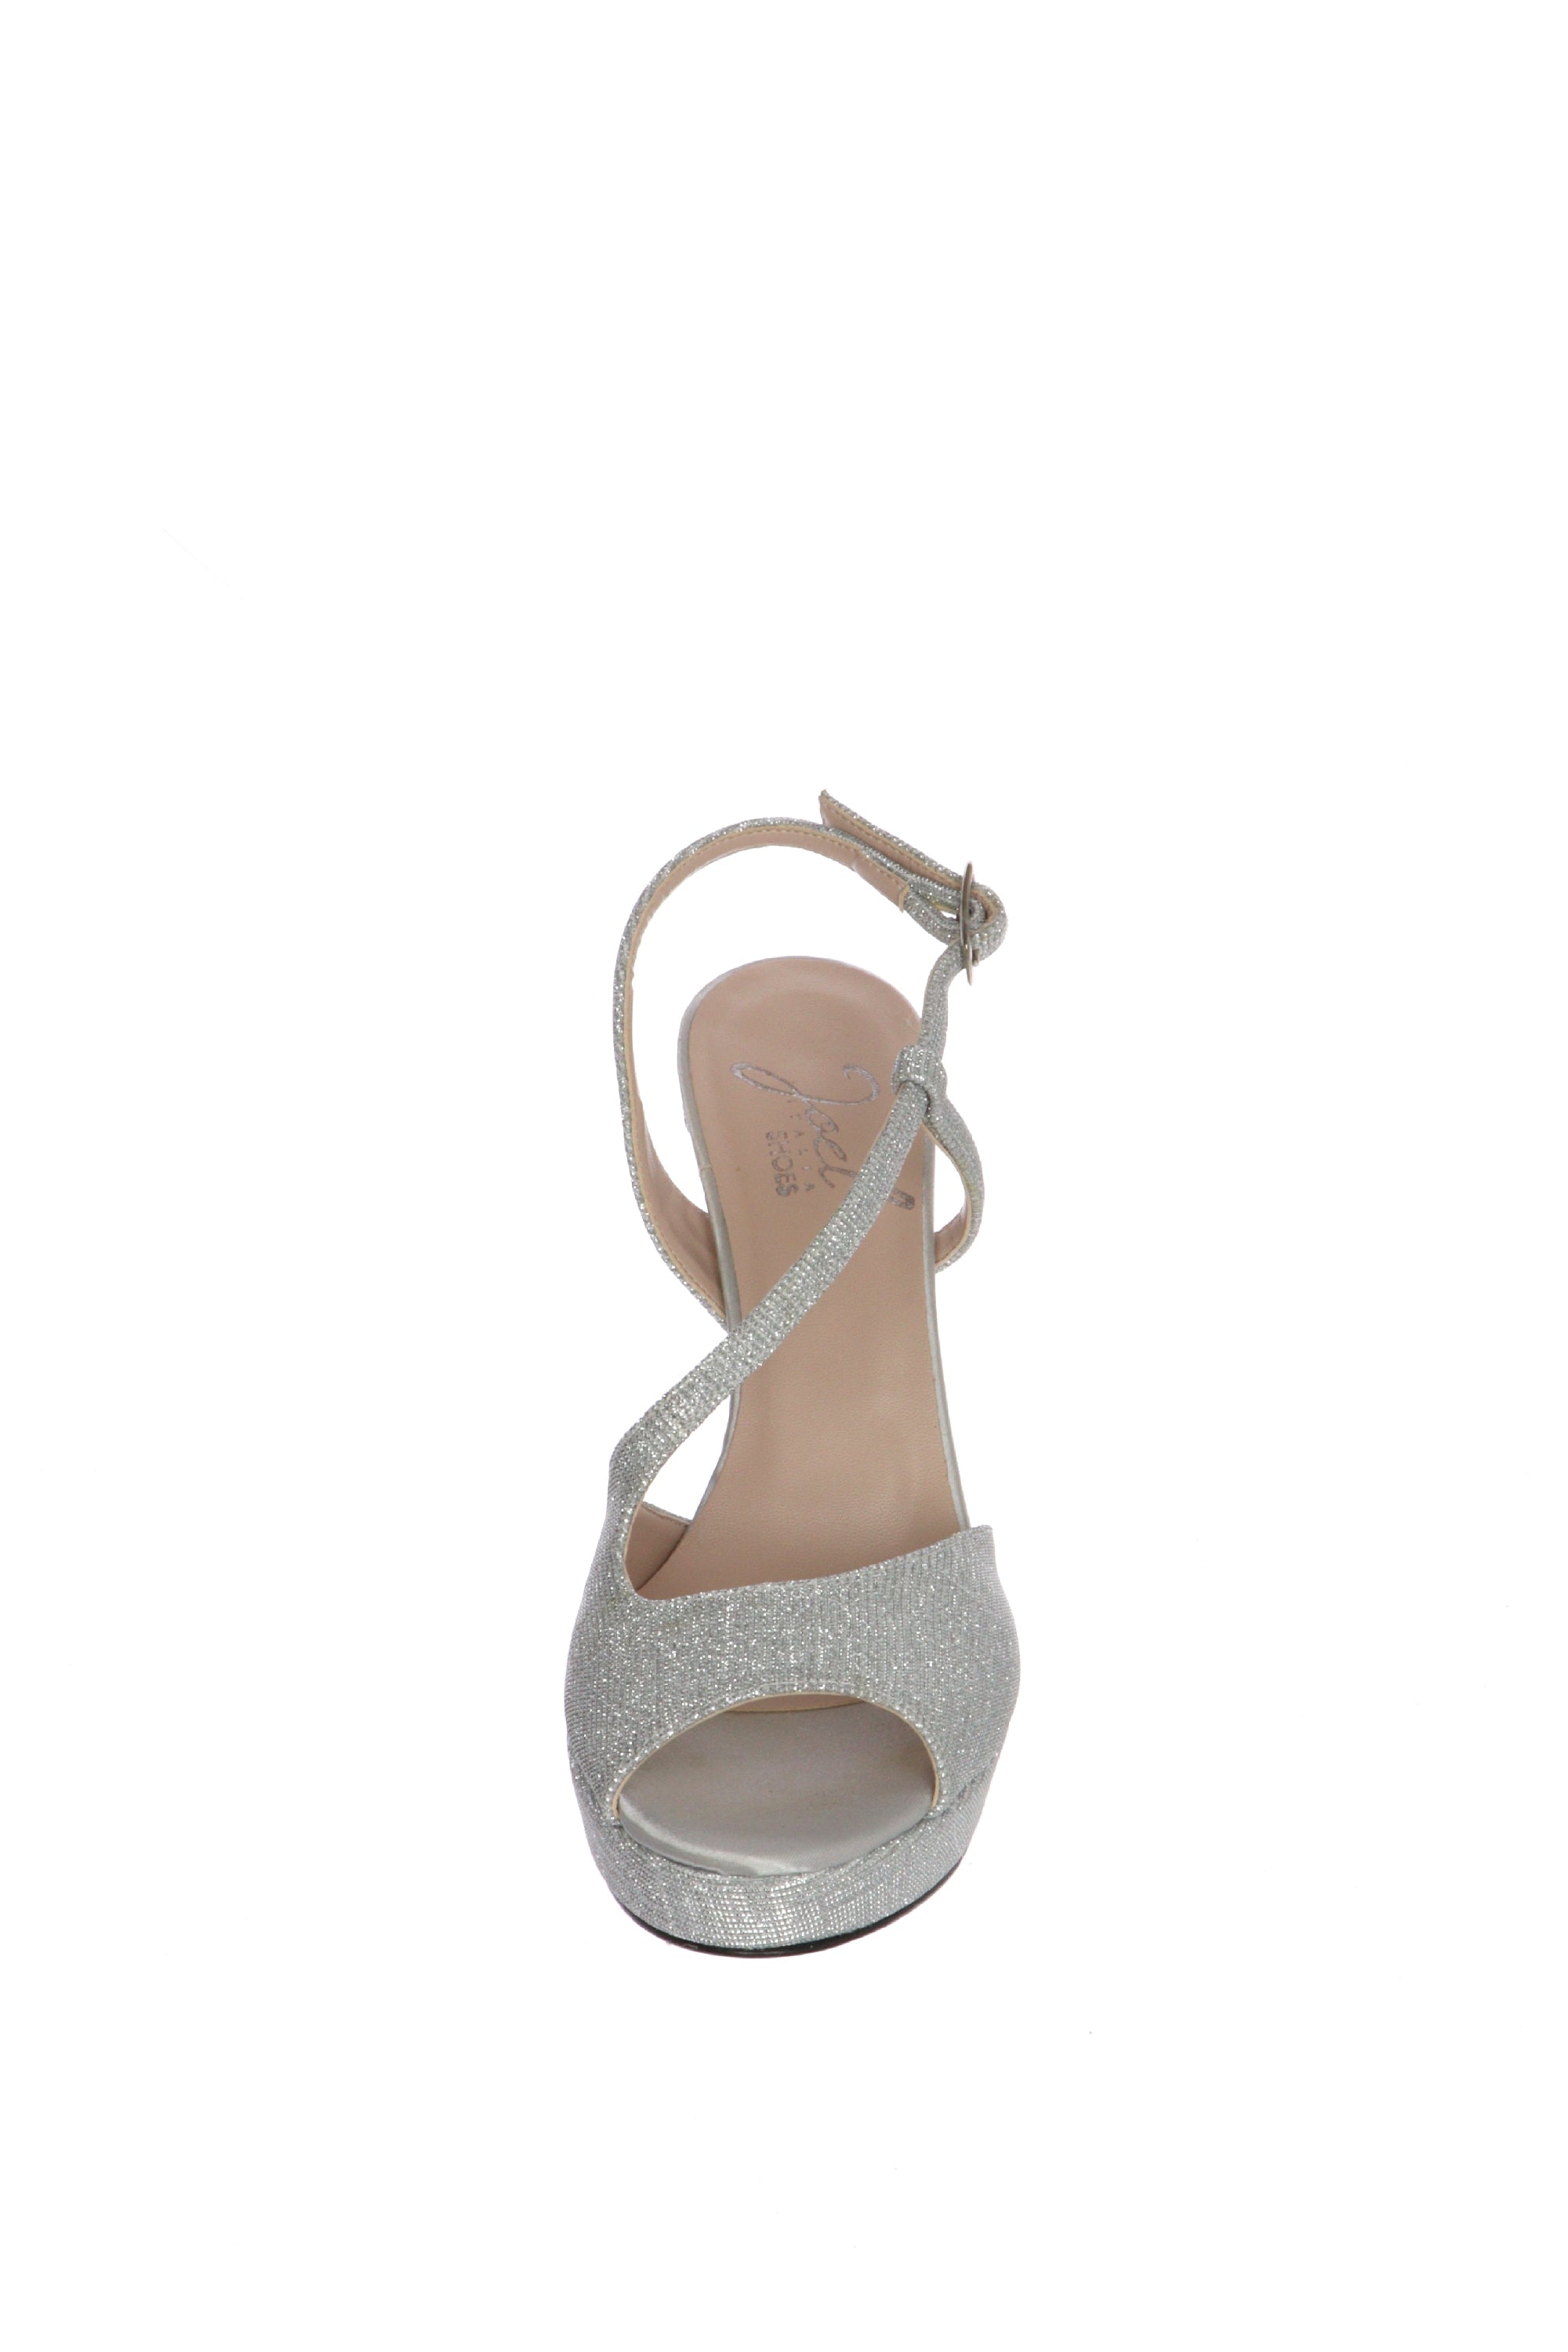 Sandalo elegante glitter argento tacco alto Joel 6024